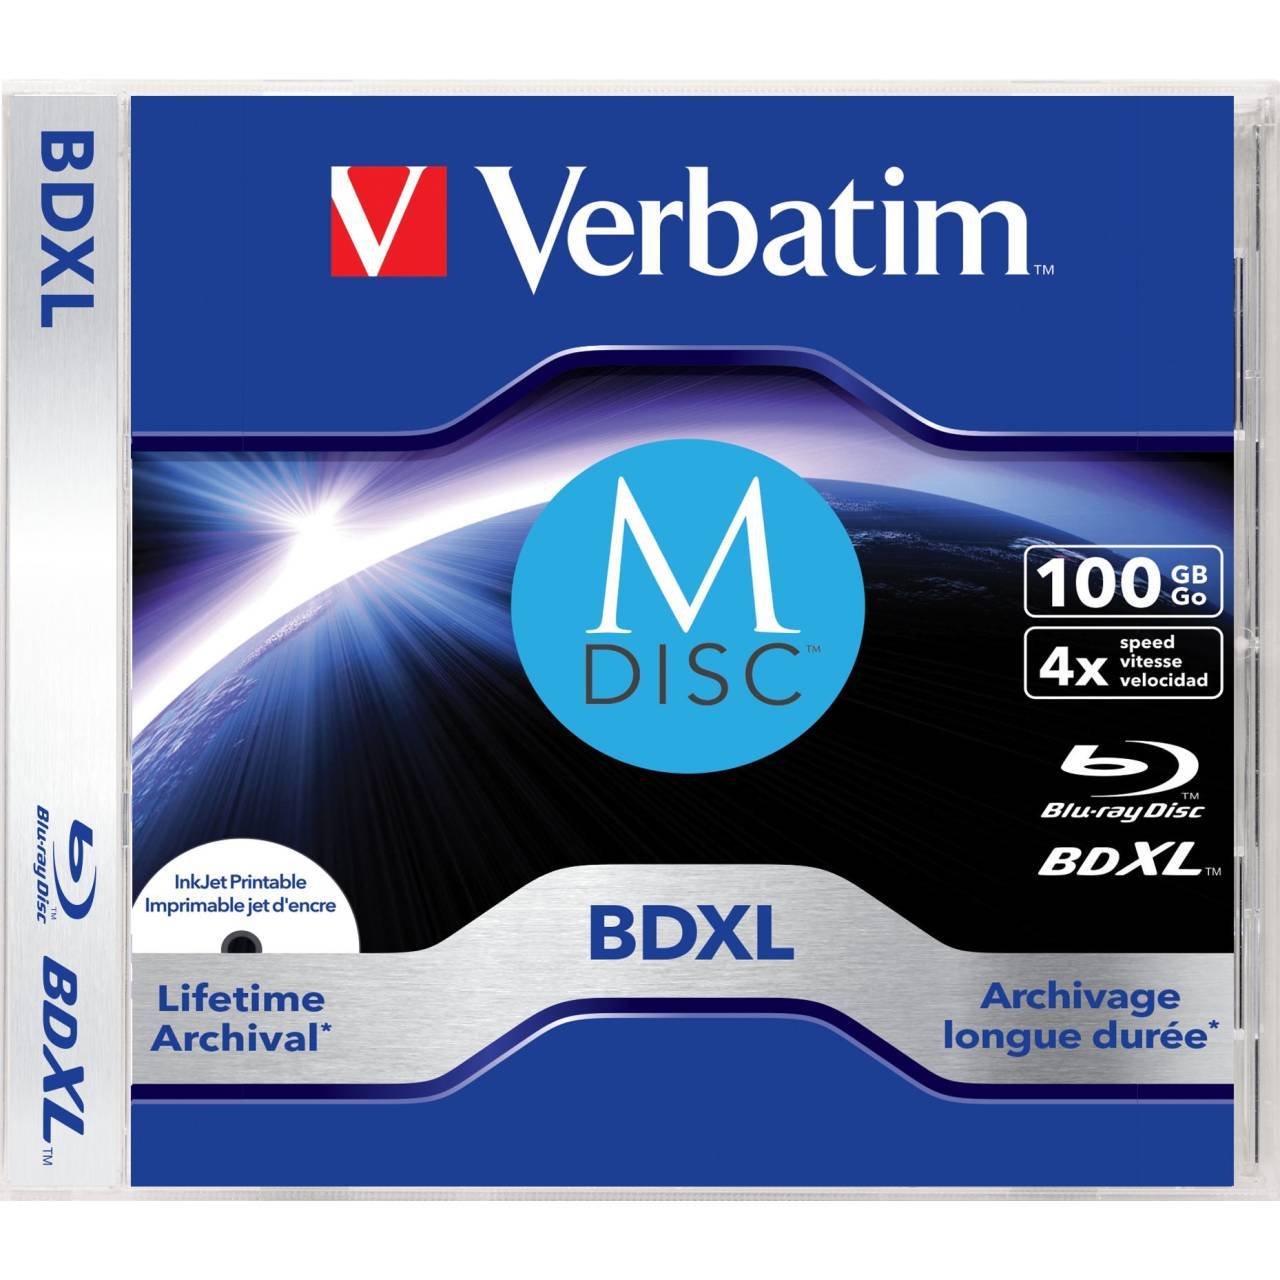 Rohling BD-R100GB Verbatim 4x M-Disc BluRay